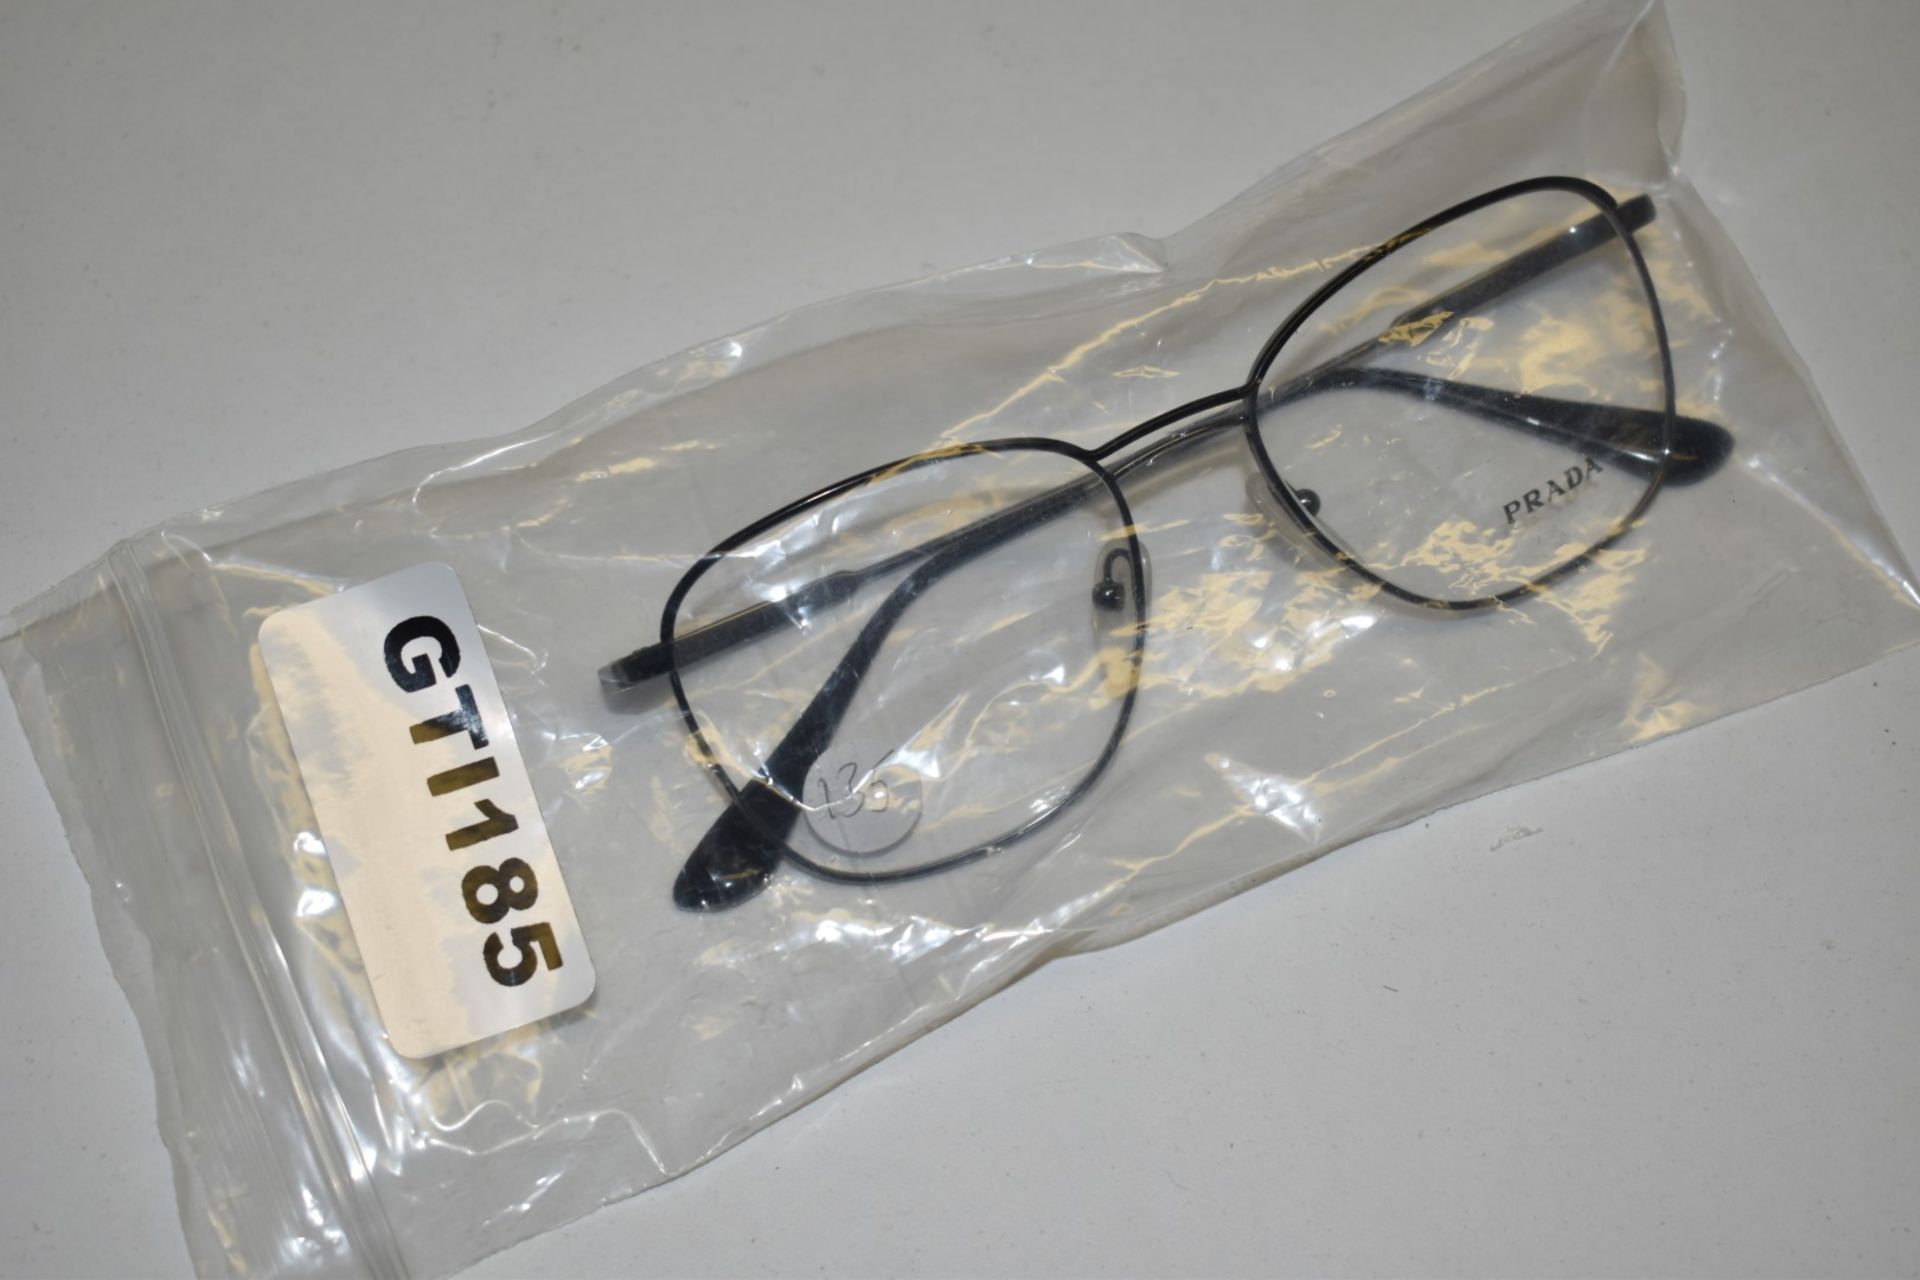 1 x Genuine PRADA Spectacle Eye Glasses Frame - Ex Display Stock  - Ref: GTI185 - CL645 - - Image 11 of 11